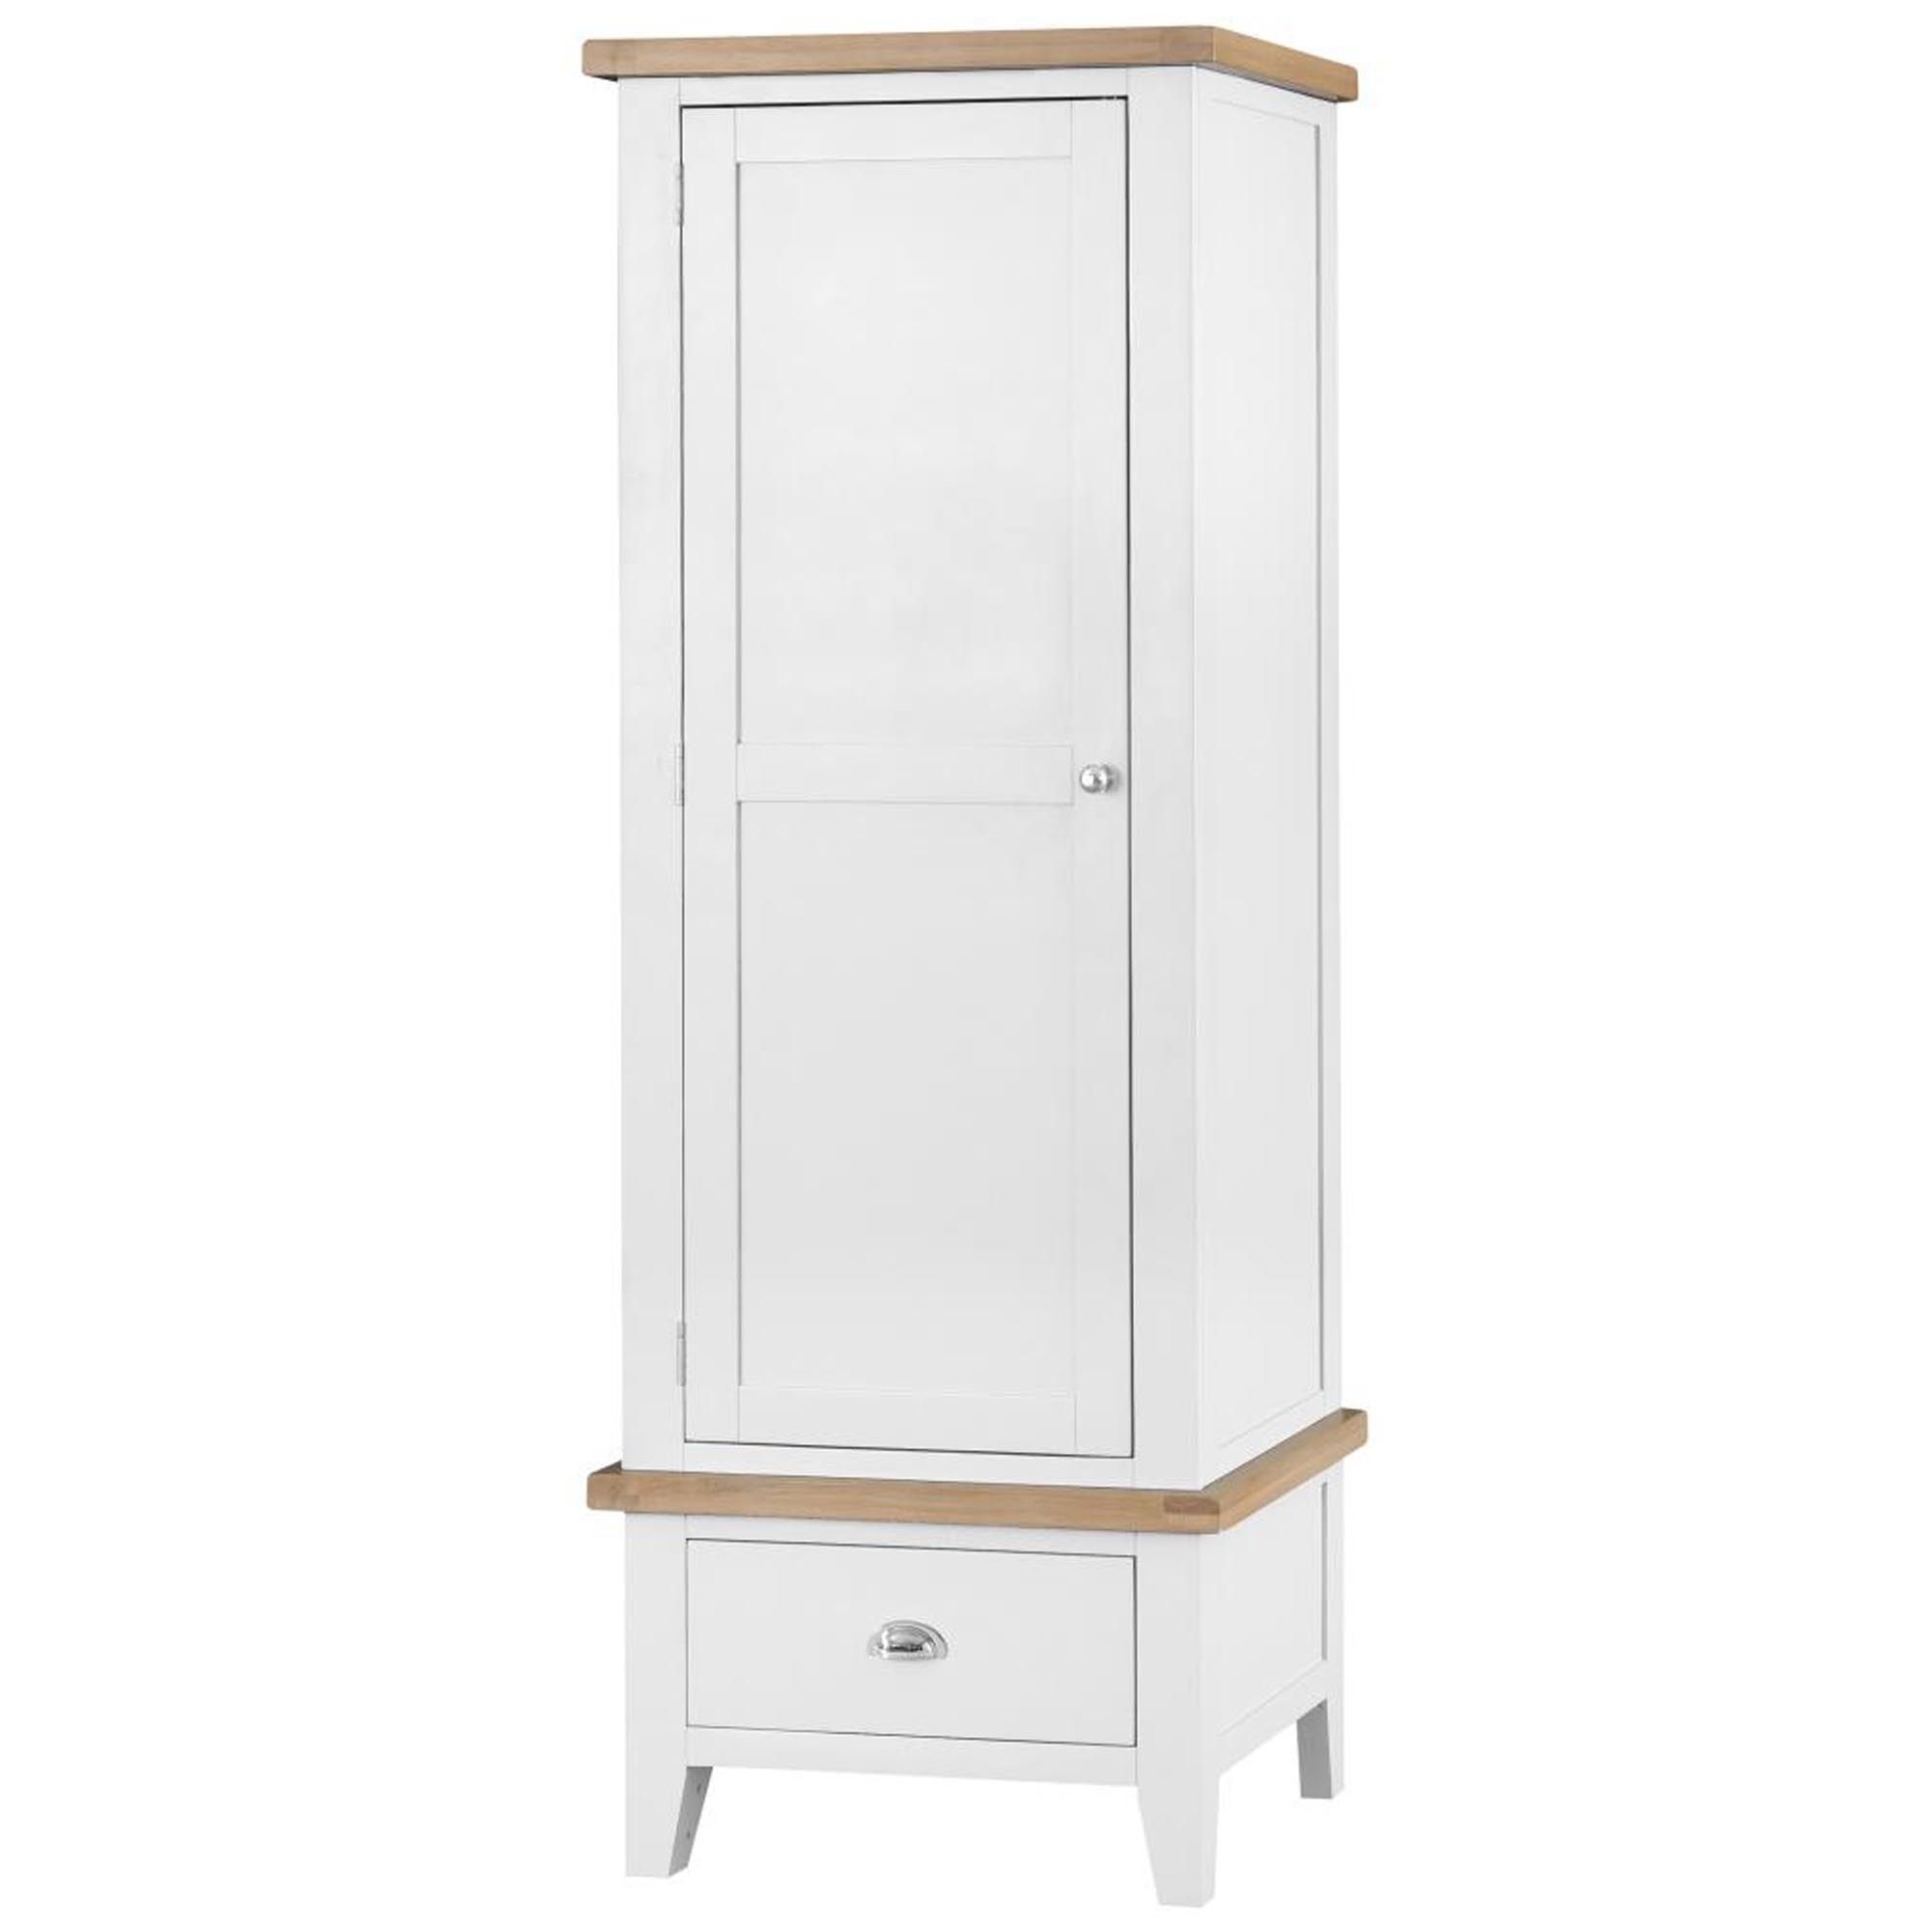 Trentino White Single Wardrobe | Bedroom Furniture | Homesdirect365 In Single White Wardrobes (Gallery 16 of 20)